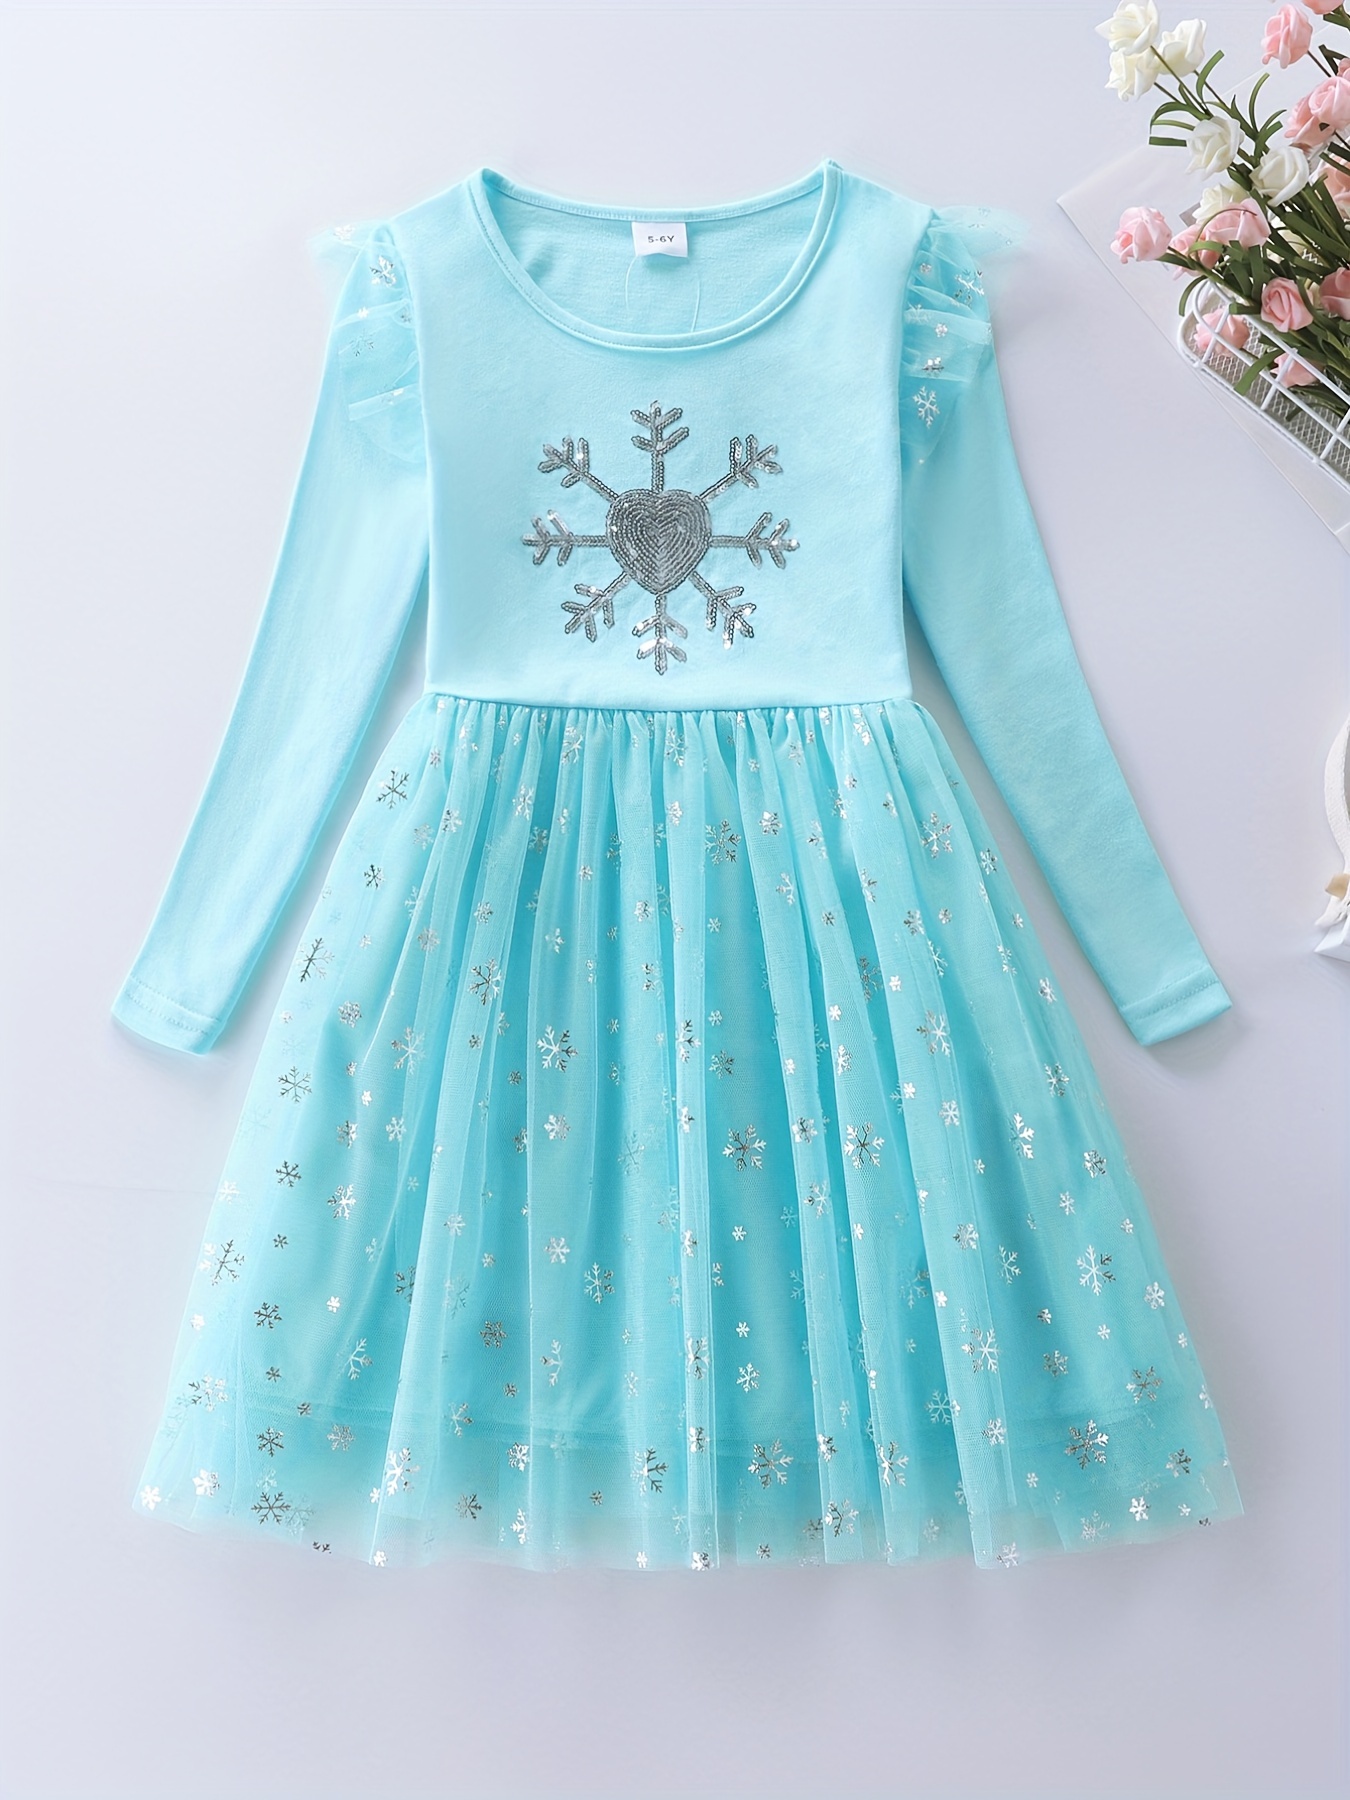 Girls Winter Holiday Dress  Snowflake Sleeveless Princess Dress